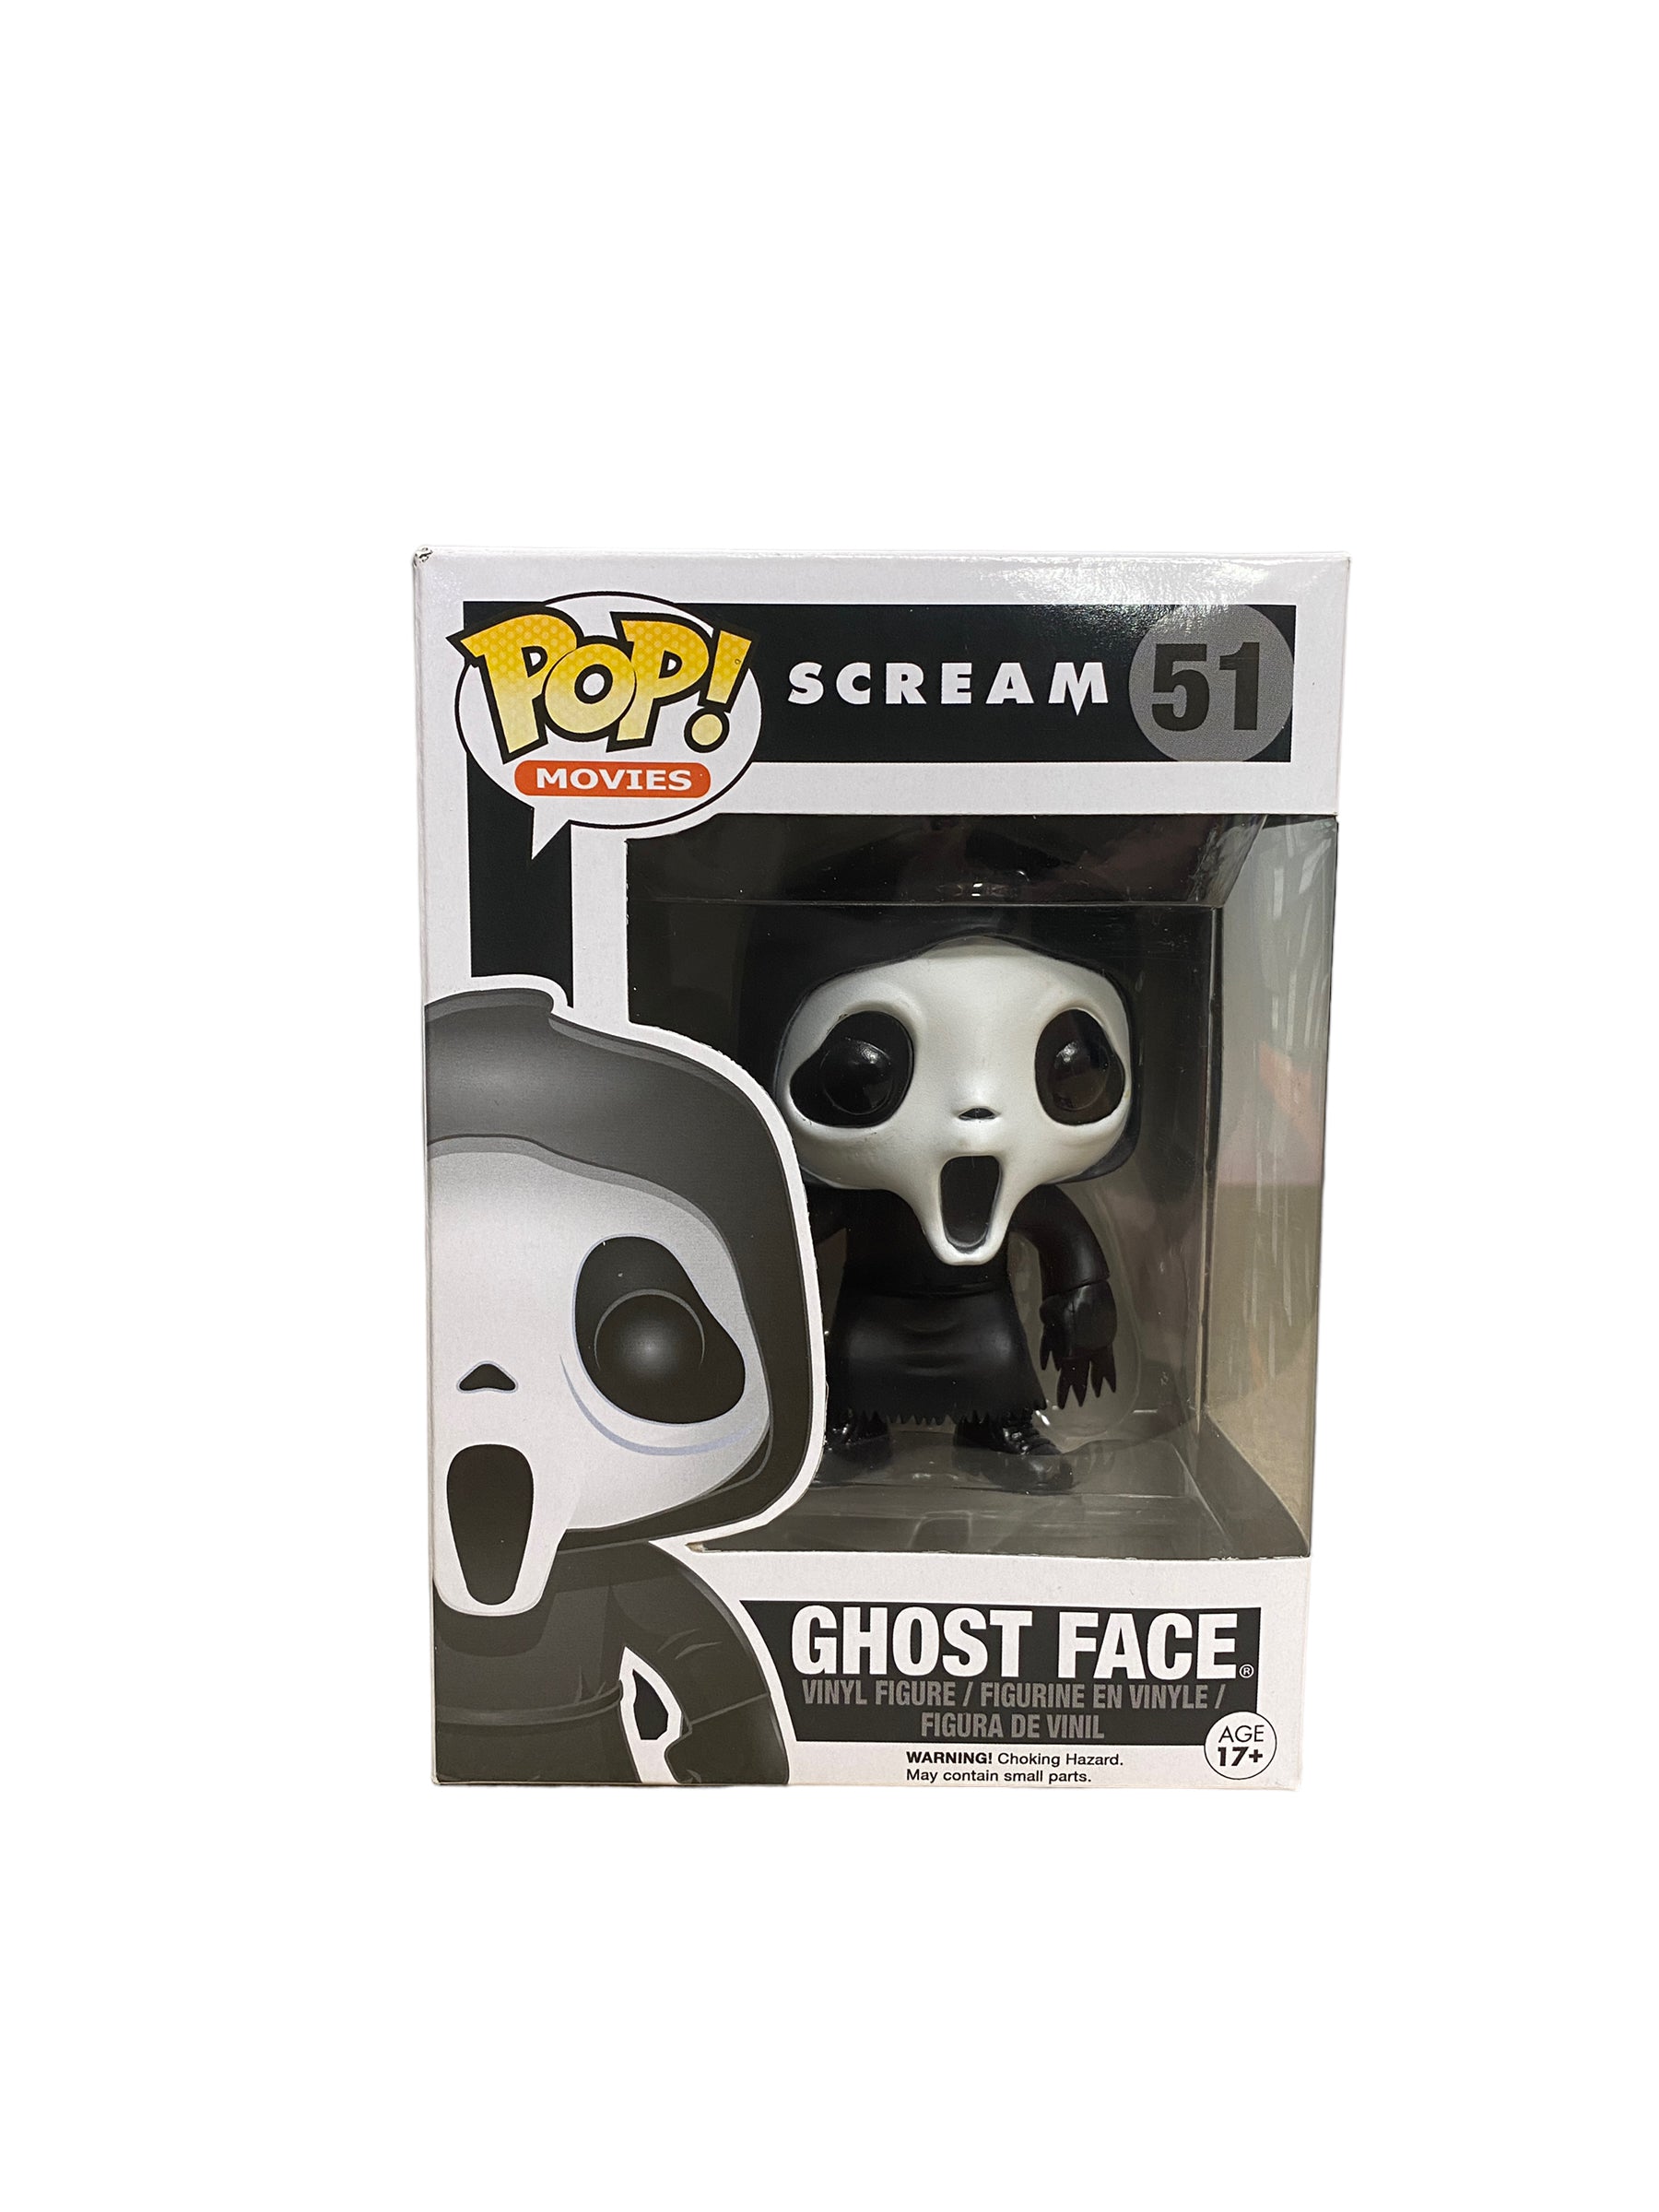 Ghost Face #51 Funko Pop! - Scream - 2017 Pop! - Condition 8.5/10